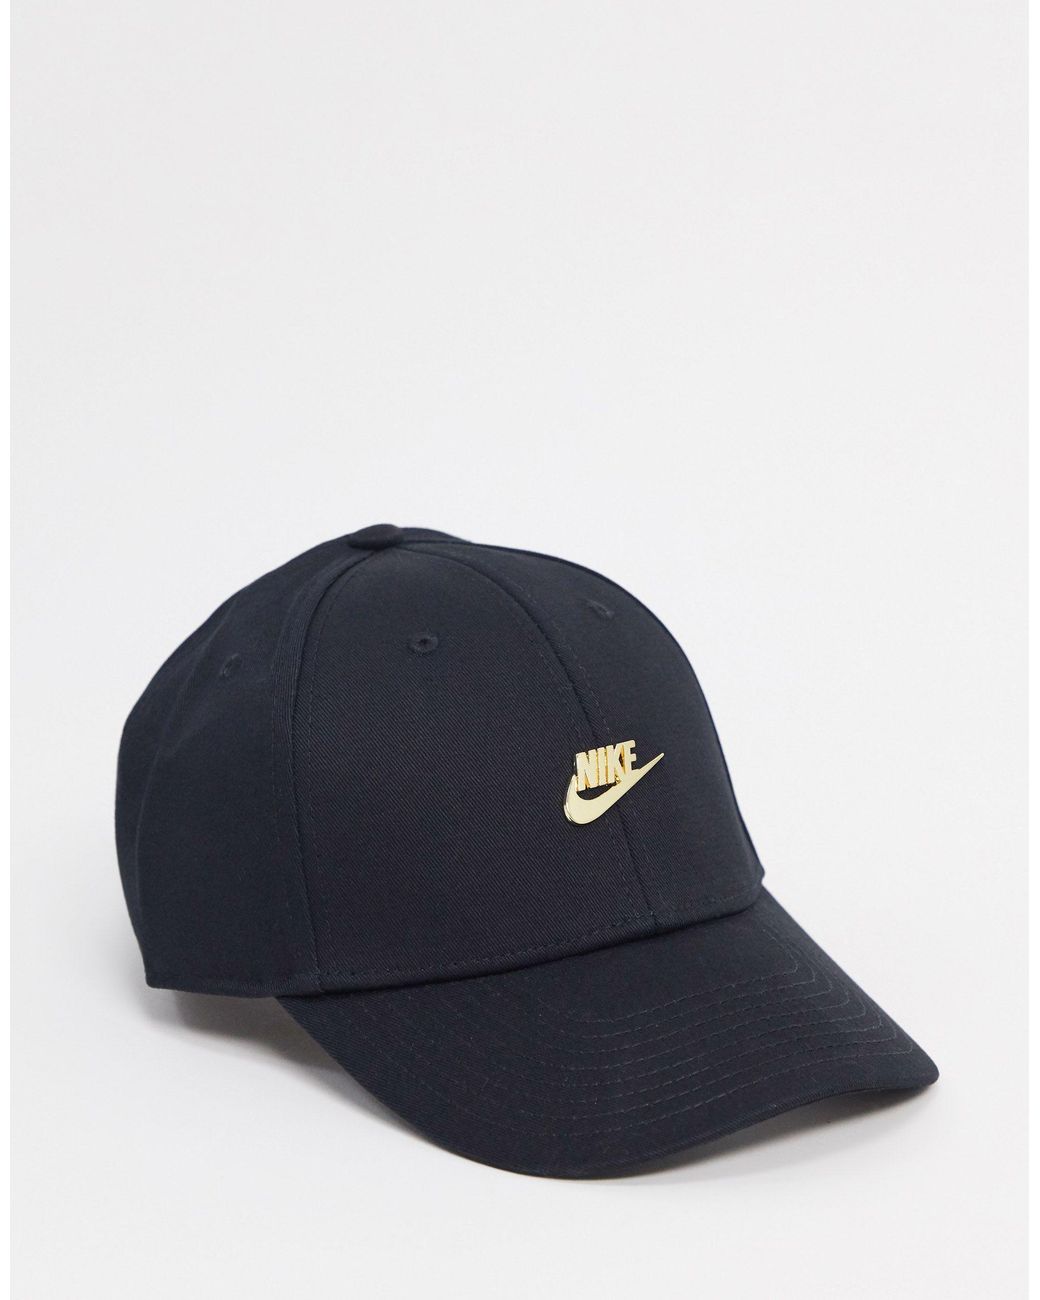 Nike Metallic Cap With Gold Logo in Black for Men | Lyst Australia